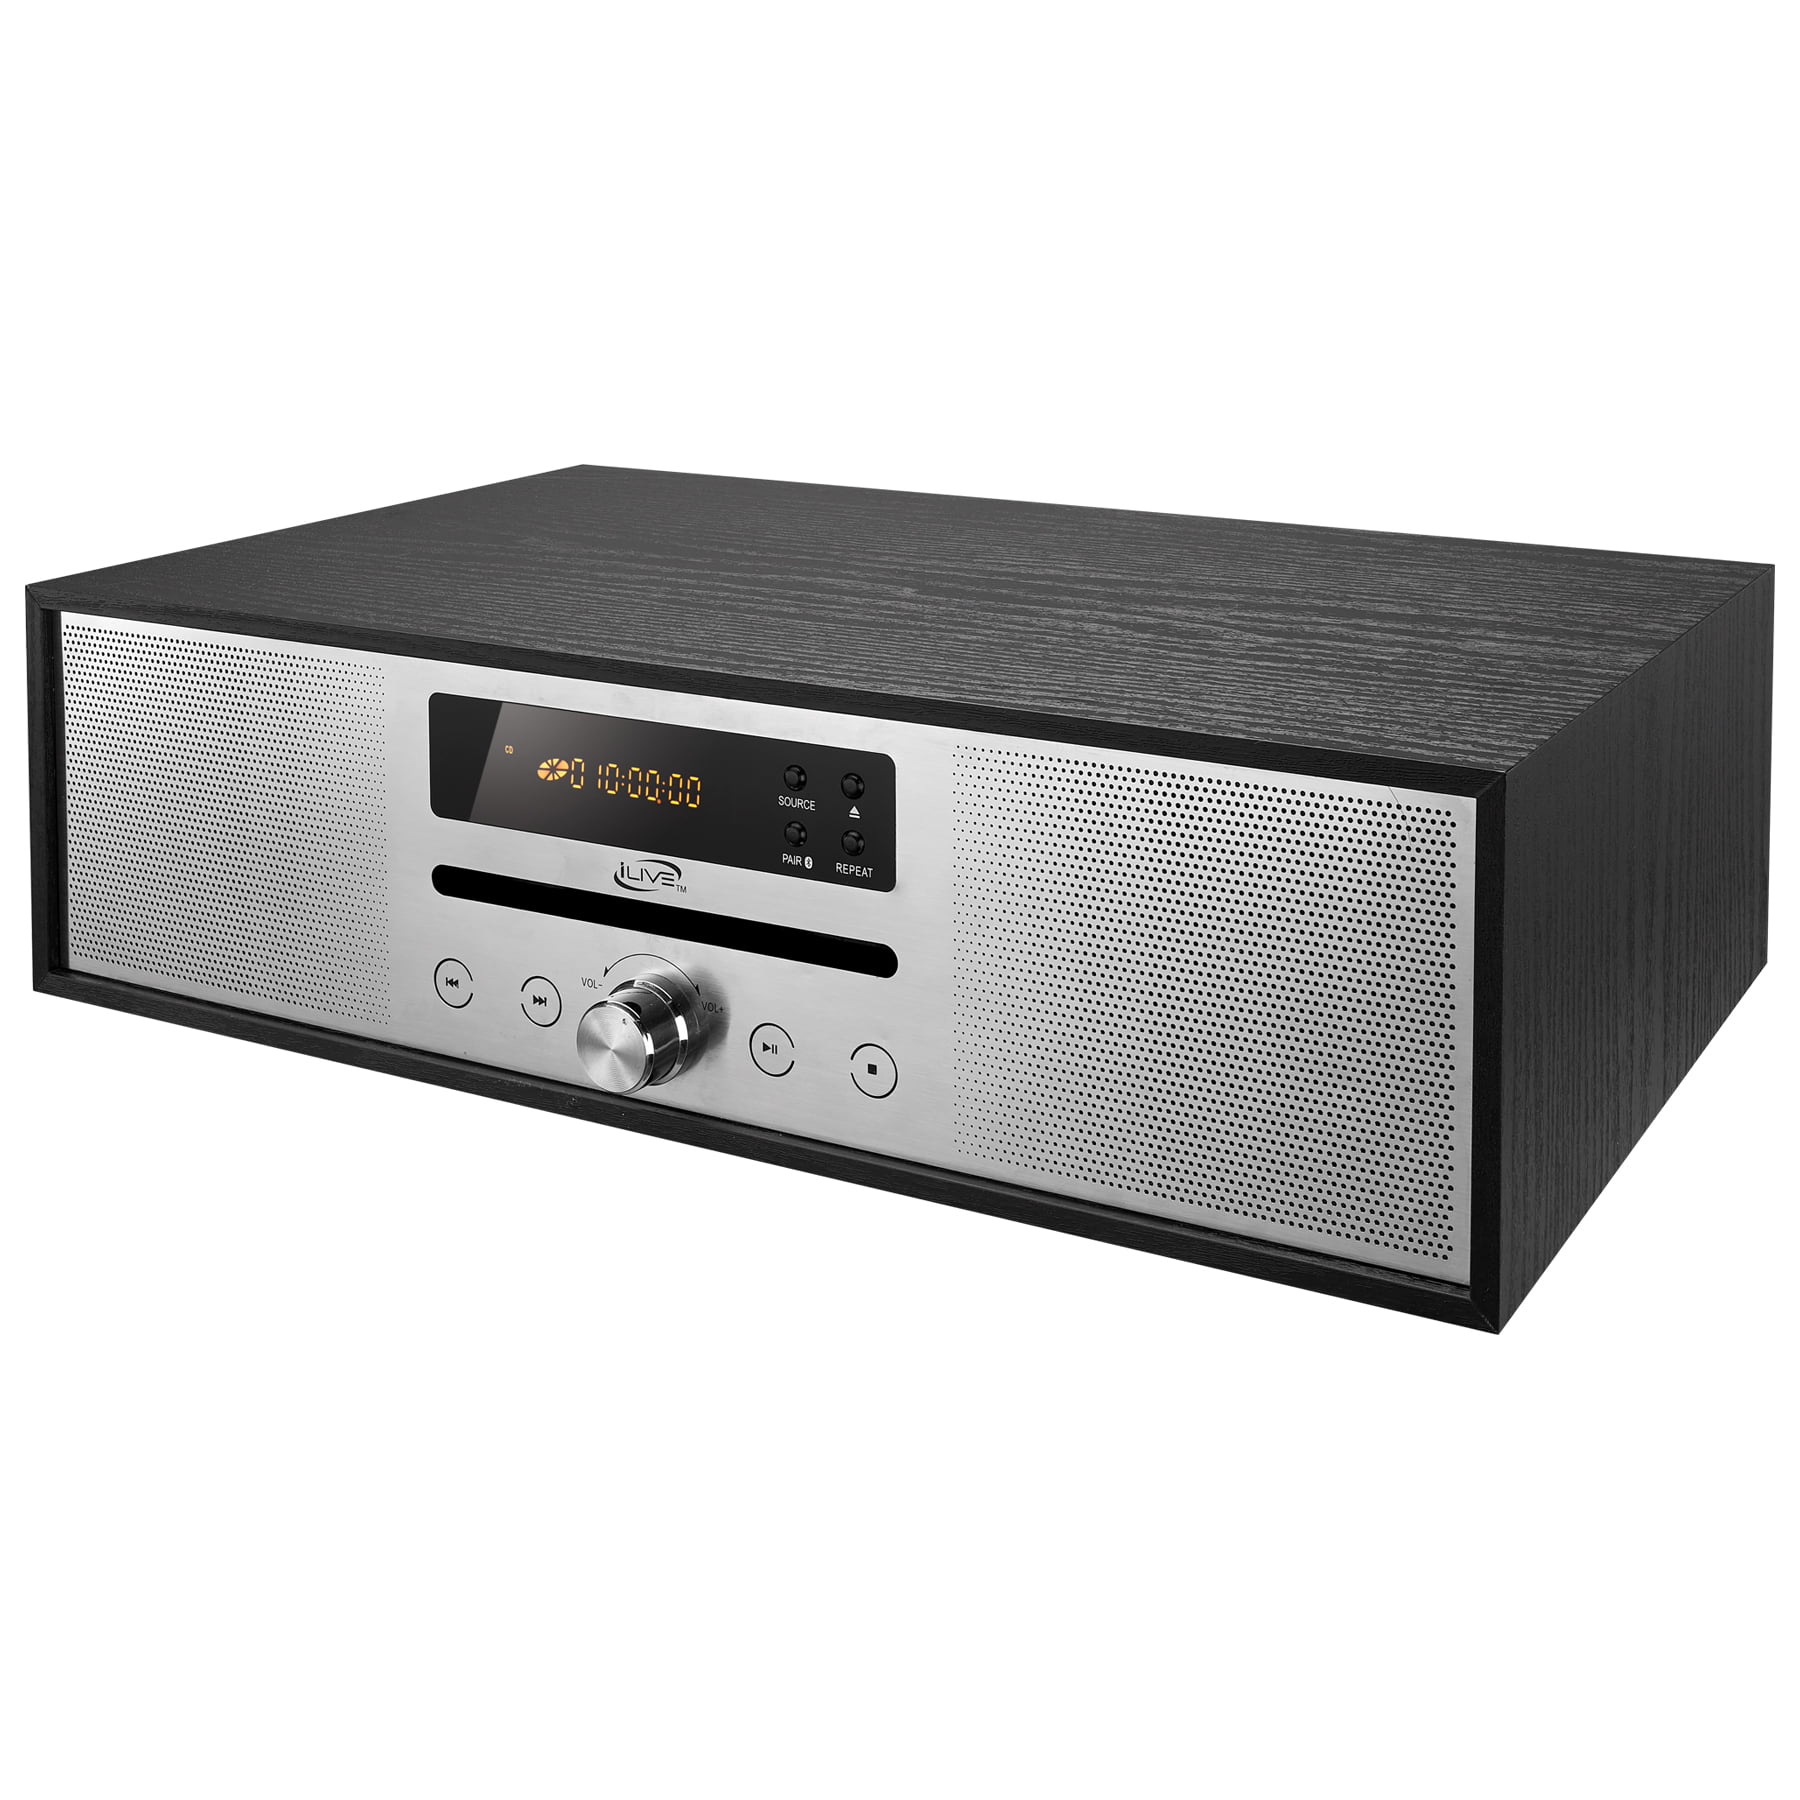 Ilive Ihb340b Ihb340b 20-watt Stereo Home Music System With Built-in Bluetooth, - Afbeelding 1 van 1